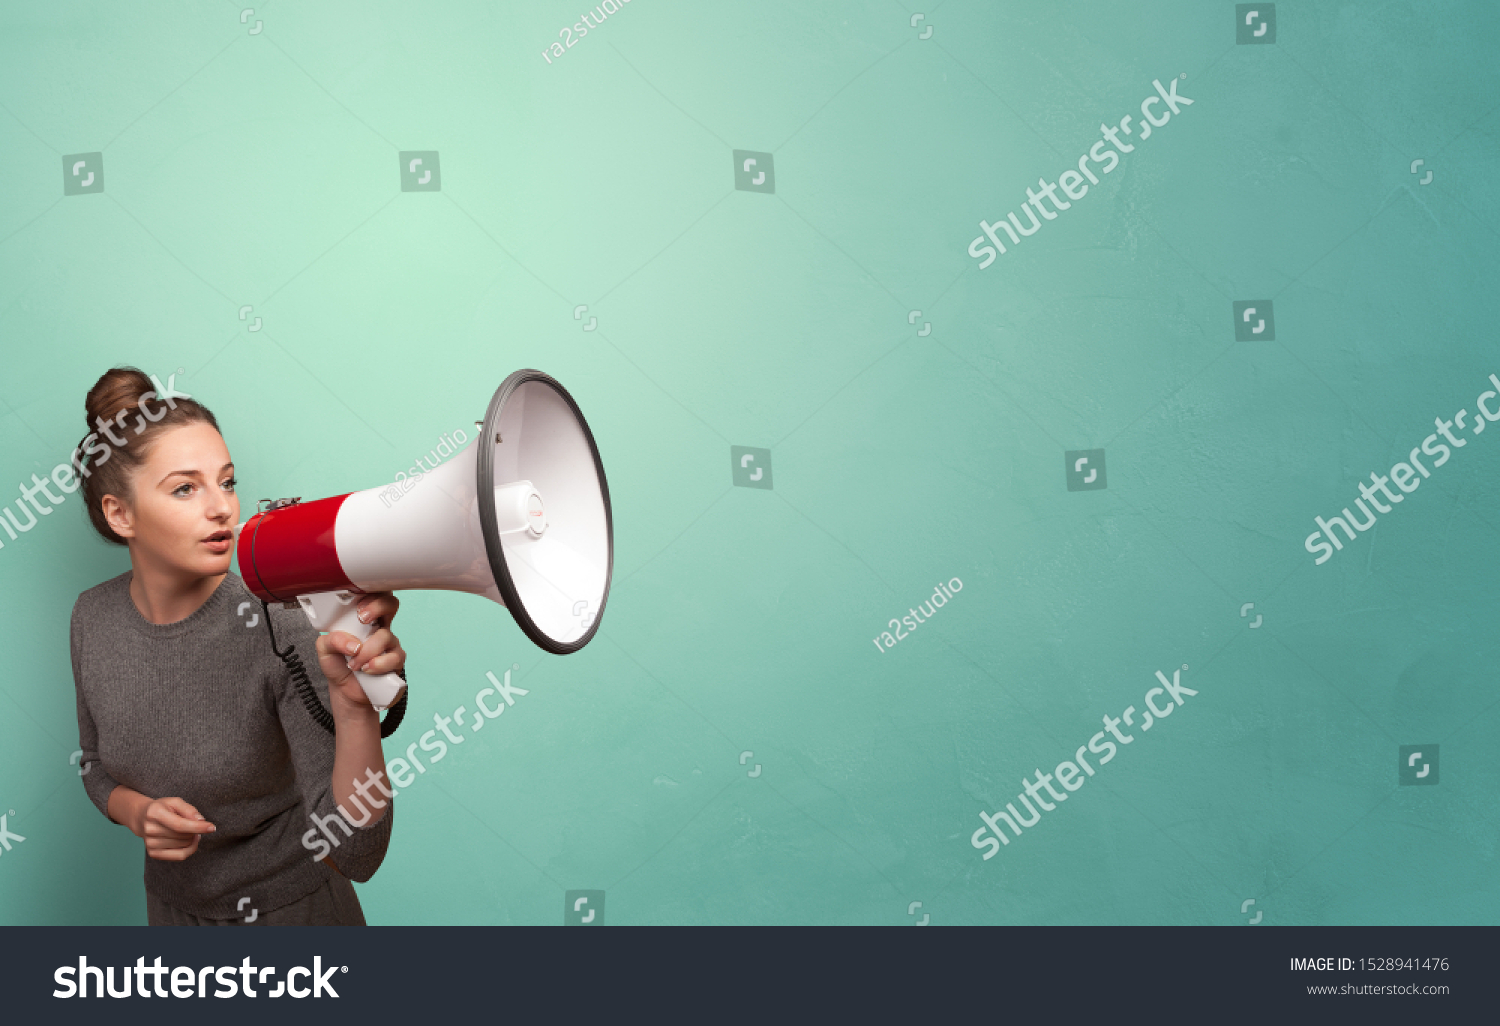 Person speaking in loudspeaker concept #1528941476